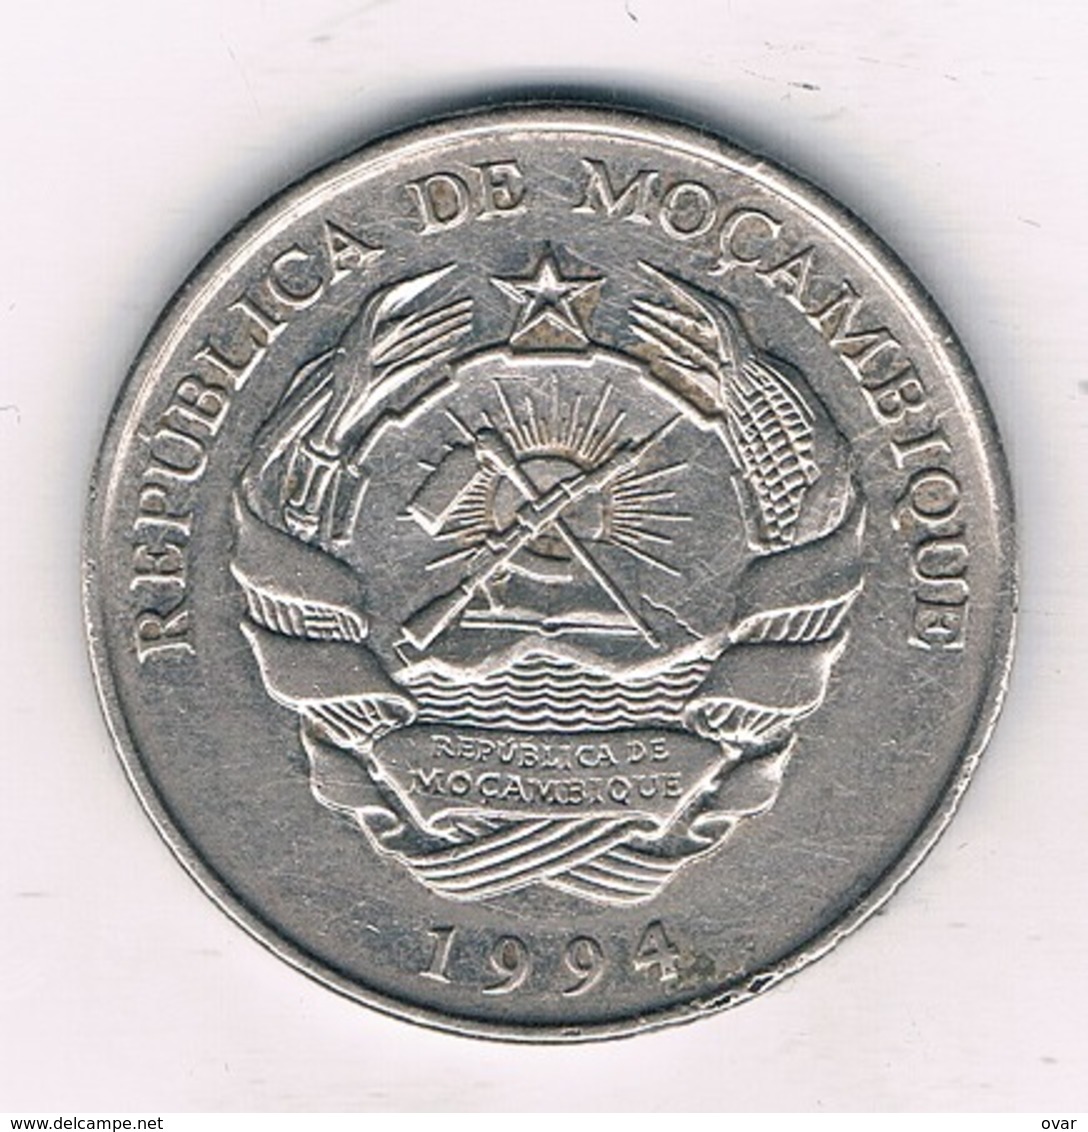 1000 METICAIS 1994 MOZAMBIQUE /6701/ - Mozambique